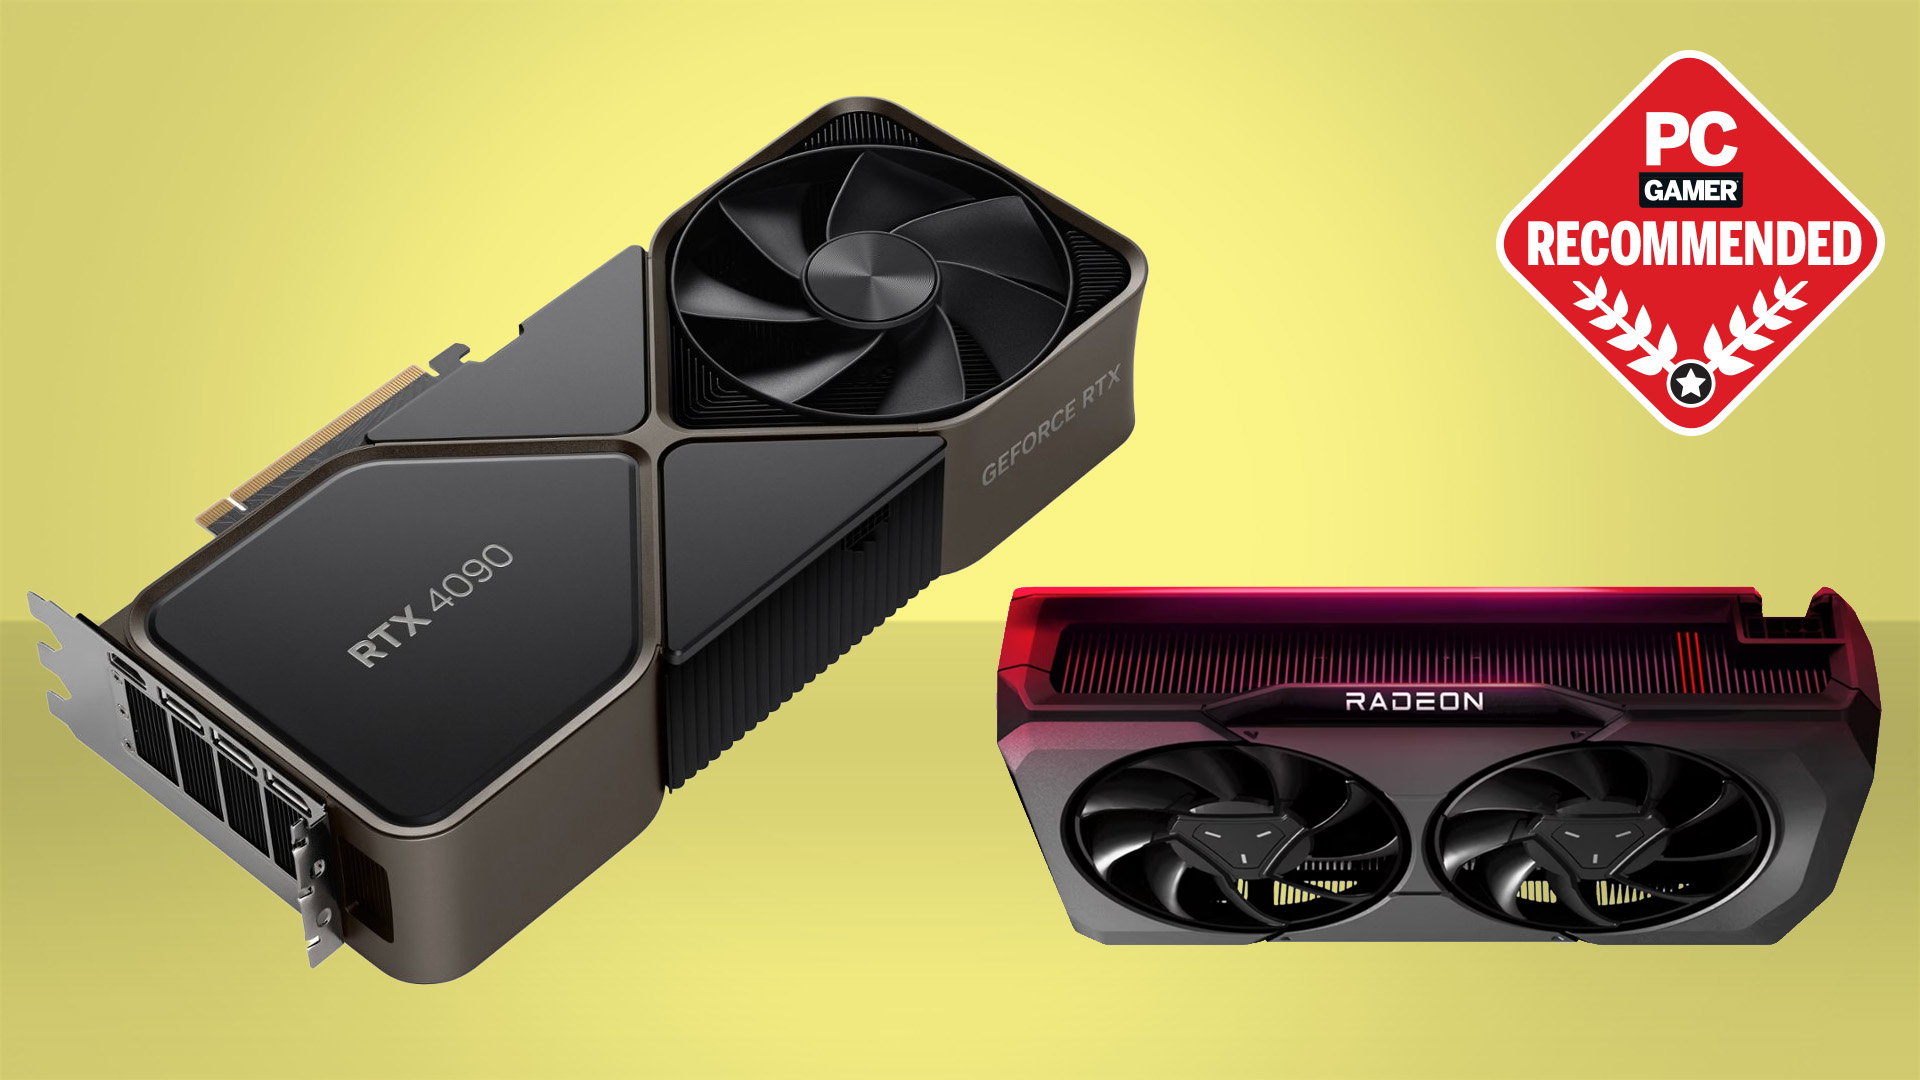 AMD Radeon RX 6650 XT – First Impressions & Benchmarks - Ebuyer Blog